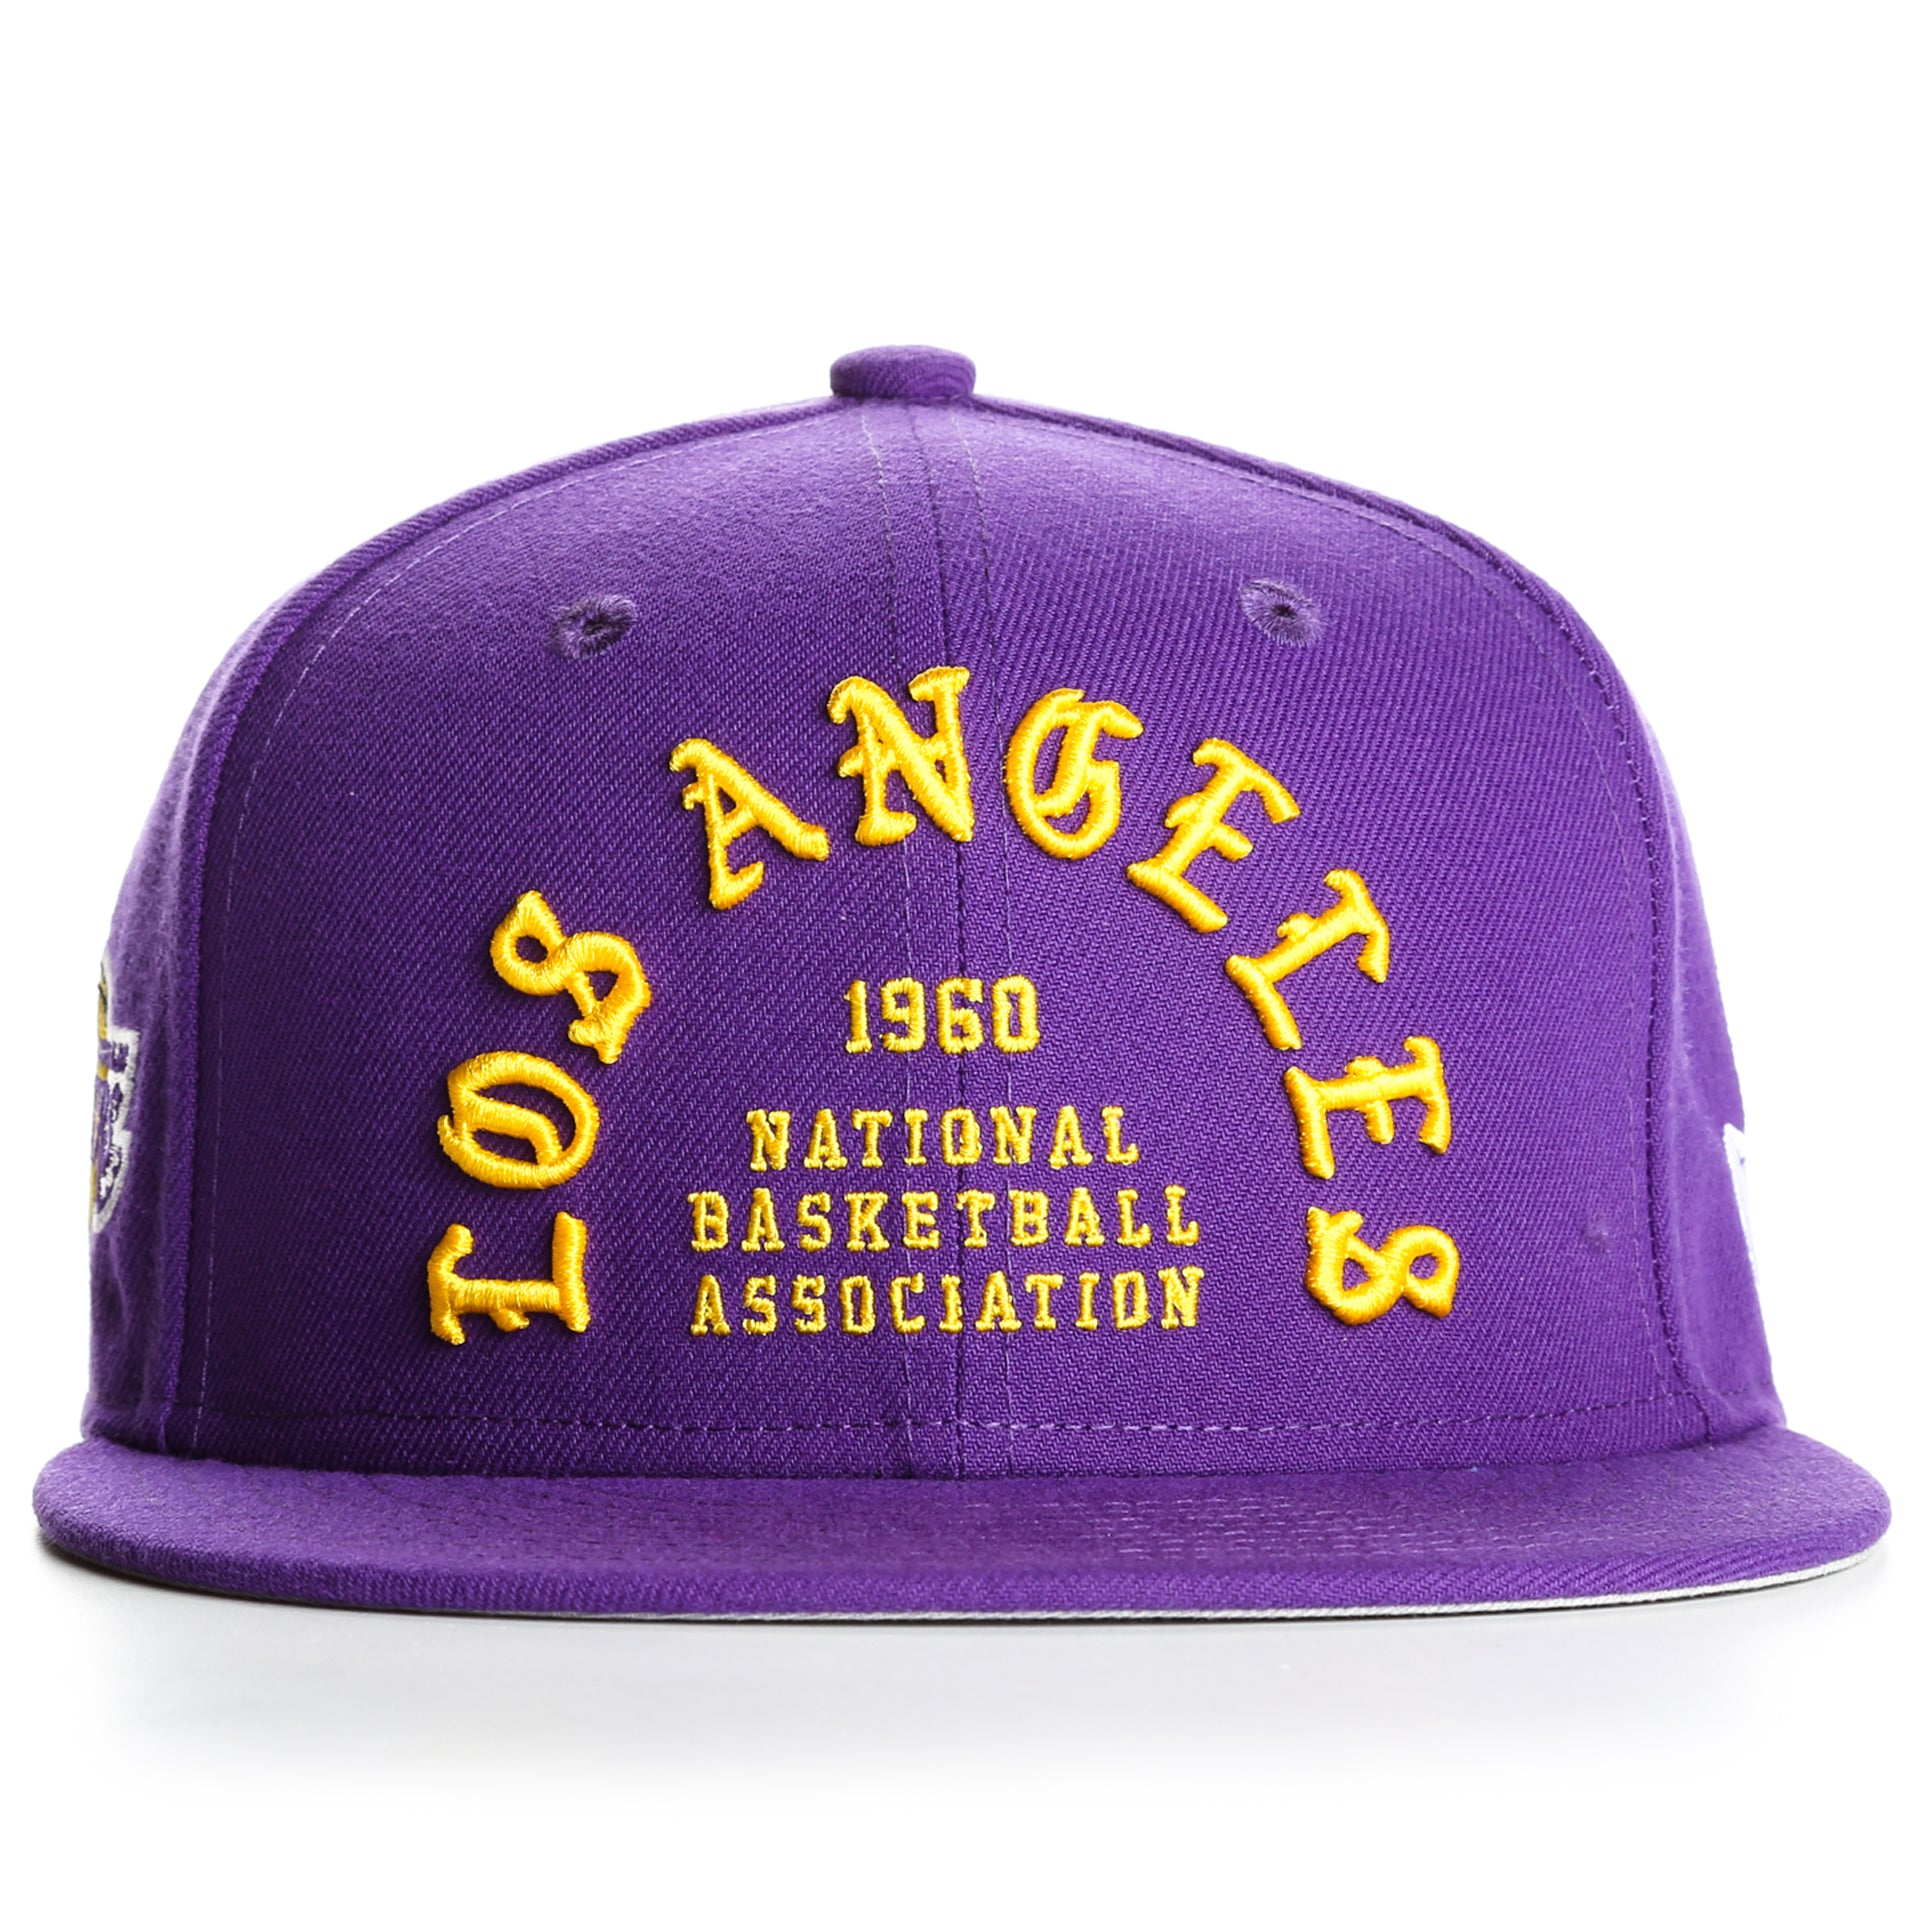 LOS ANGELES LAKERS NBA BASKETBALL TEAM HAT CAP SNAPBACK YELLOW BY ADIDAS  NEW